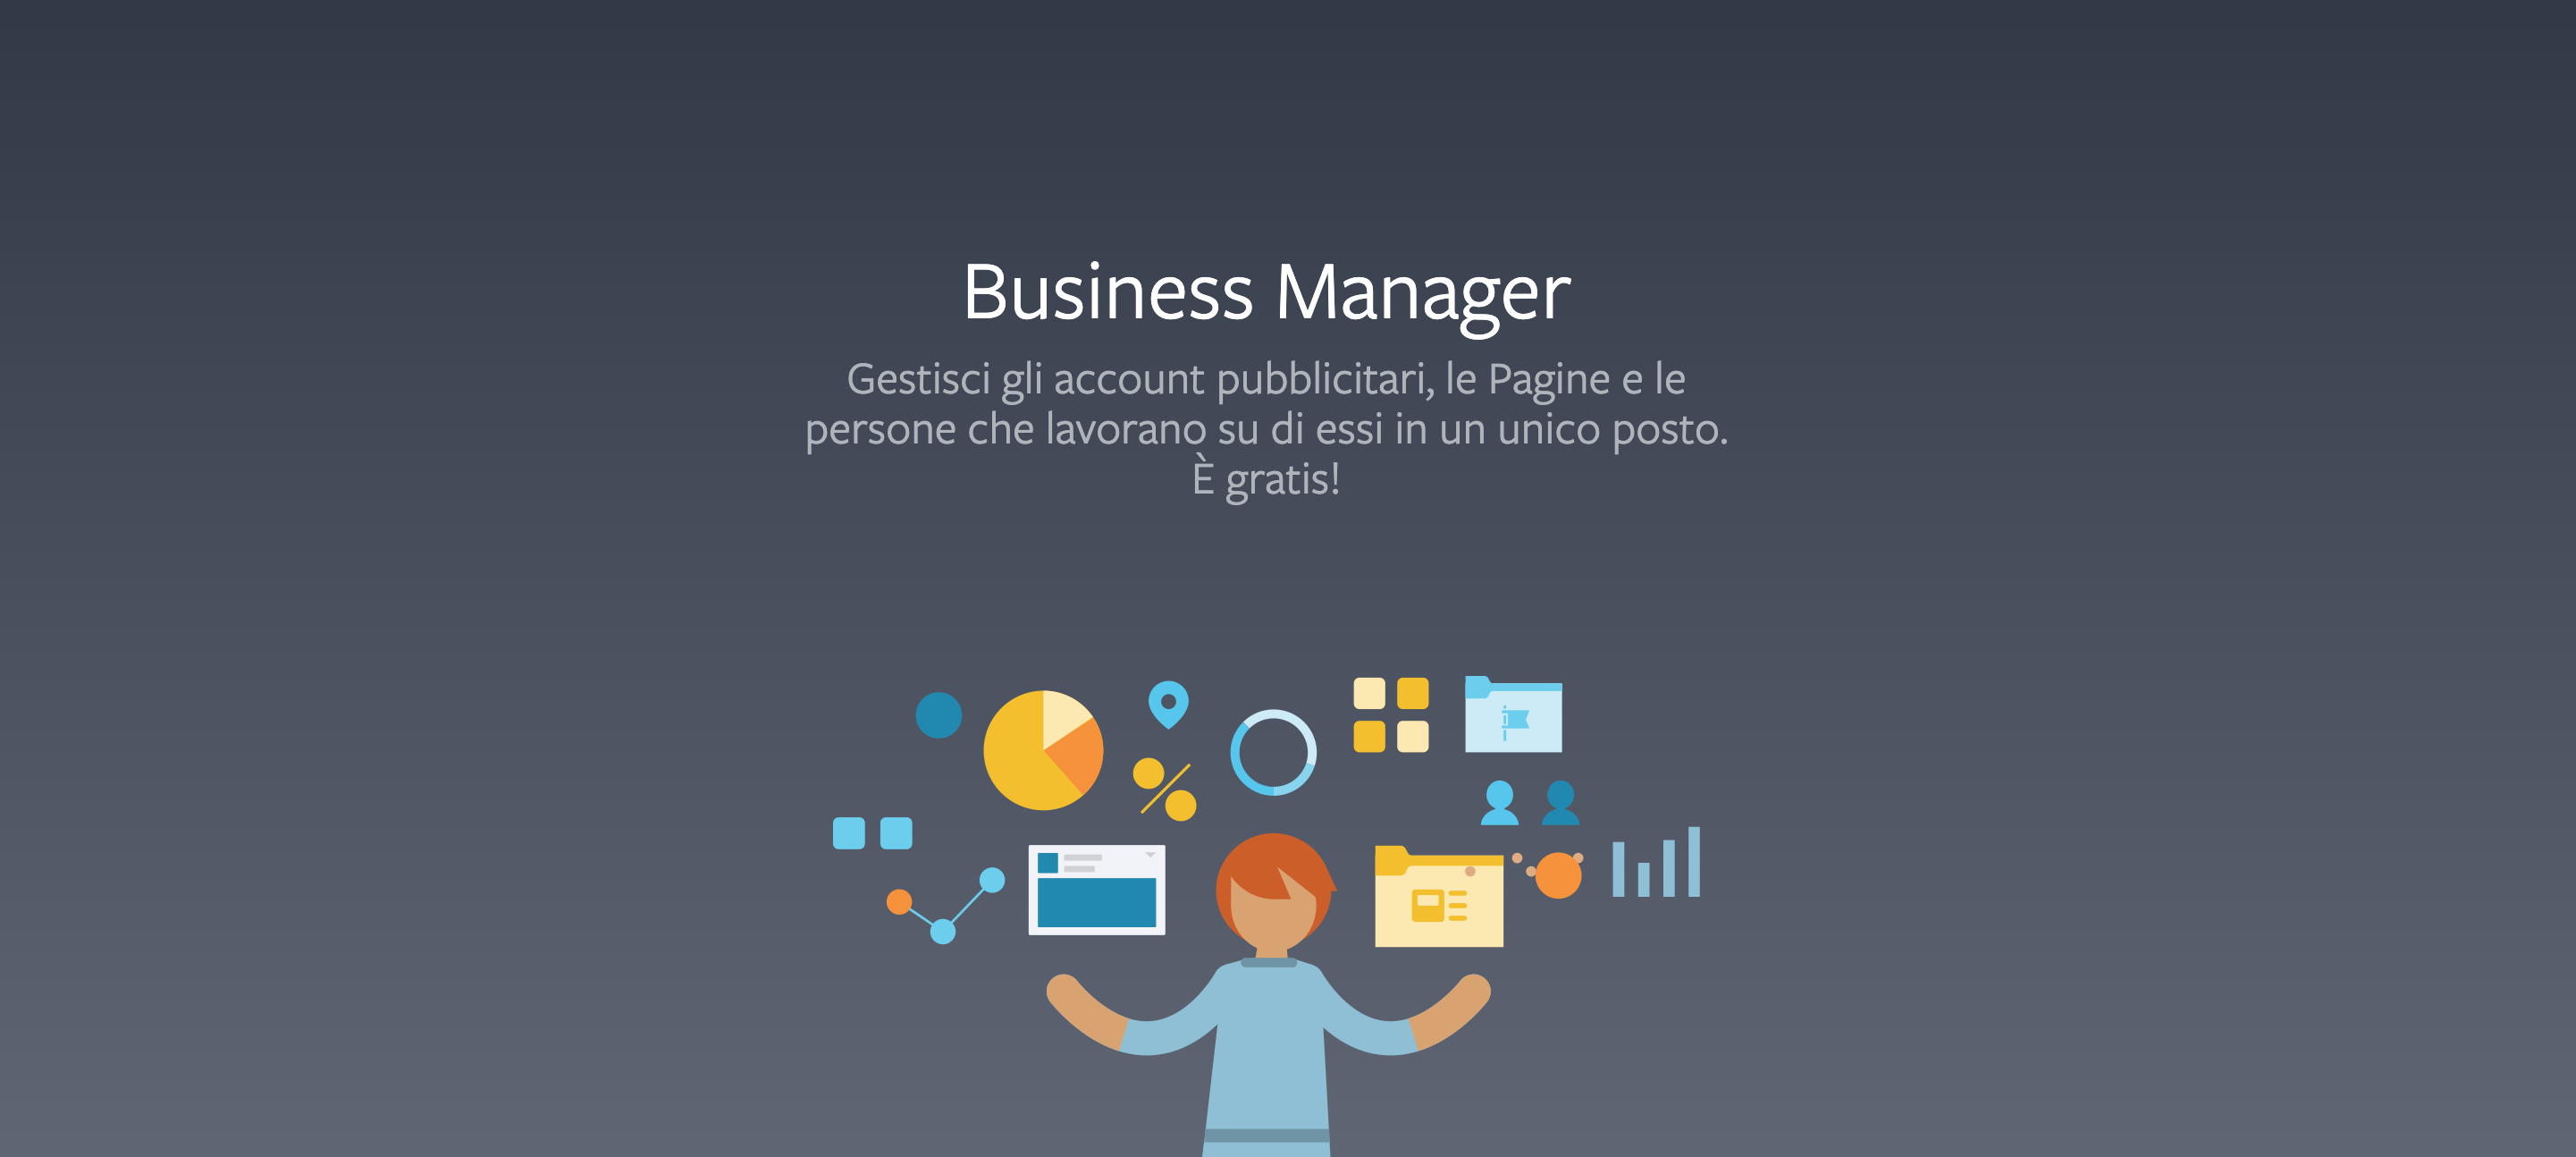 Facebook Business Manager - Creare account pubblicitario